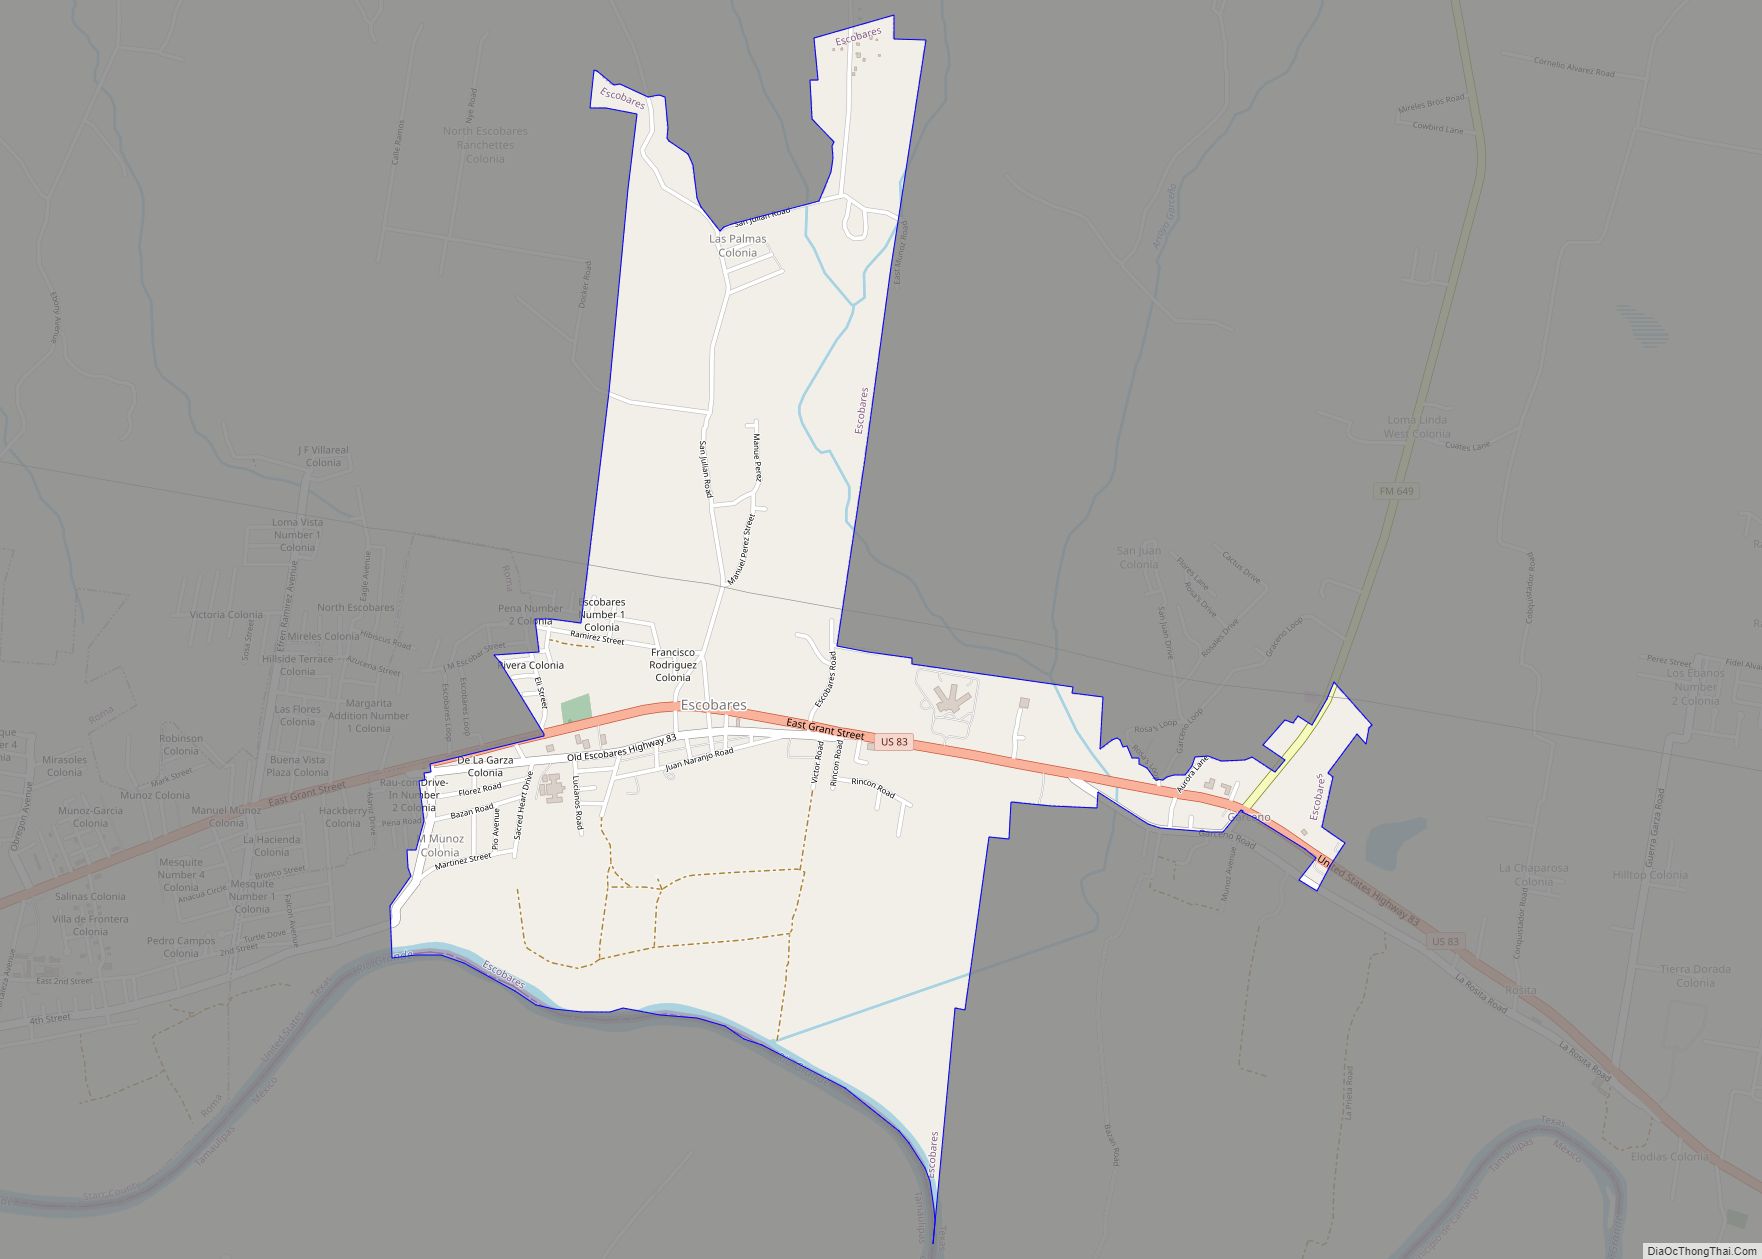 Map of Escobares city